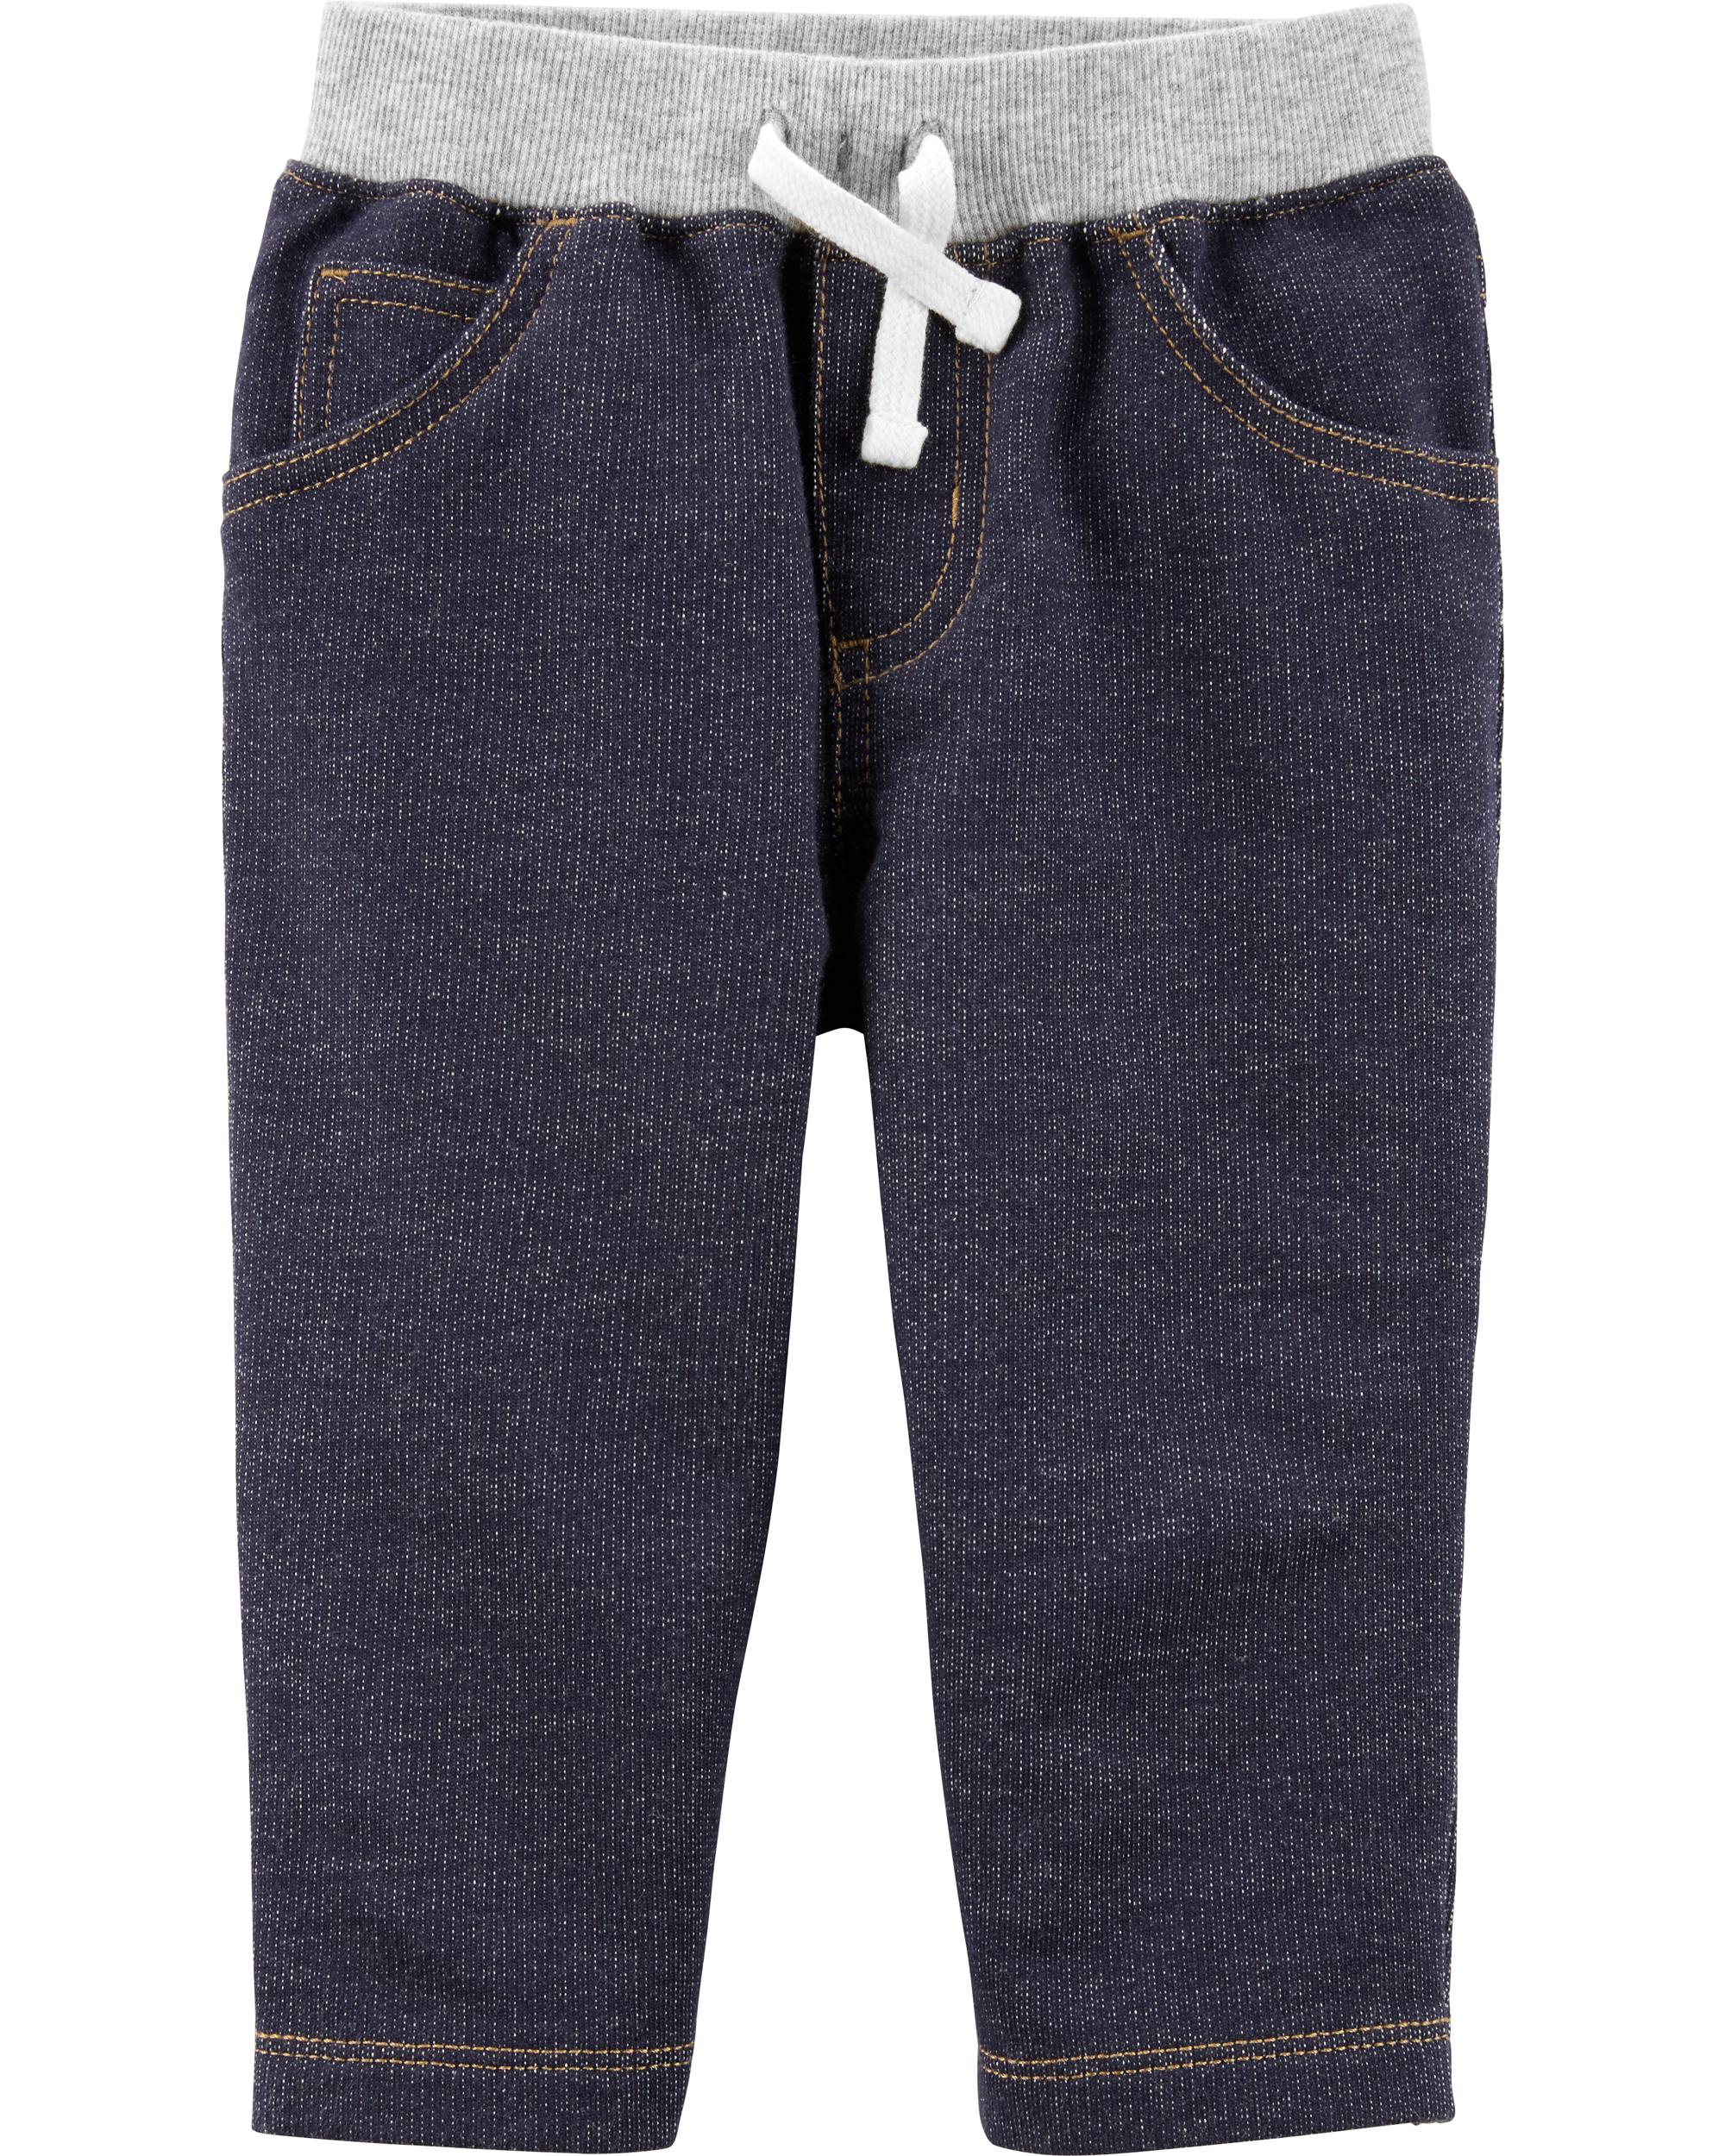 Pull-On Knit Denim Pants | carters.com